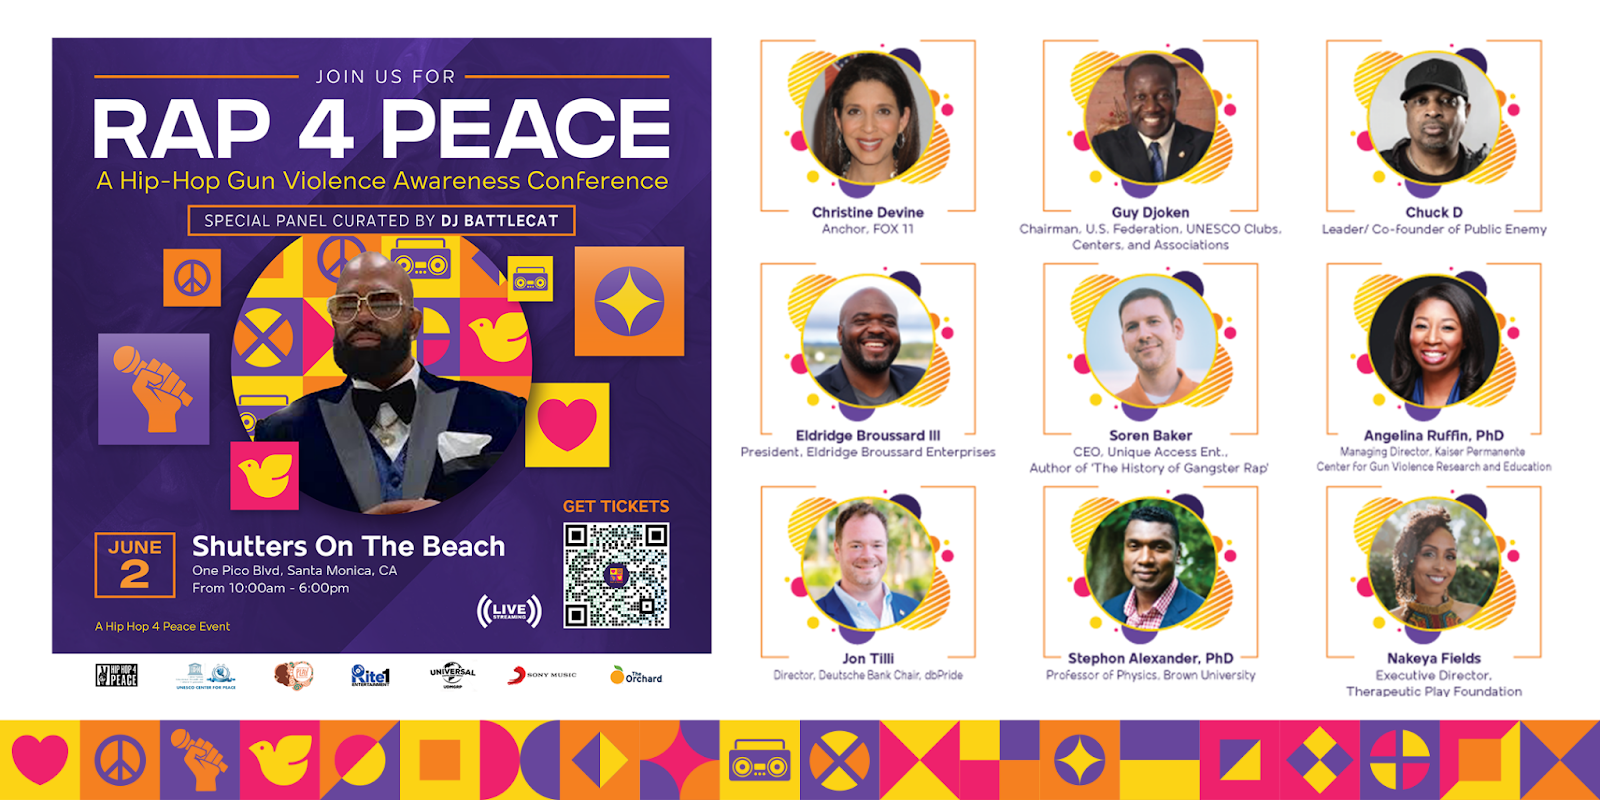 Hip Hop 4 Peace Joins UNESCO for “Rap 4 Peace” Conference Addressing Gun Violence Awareness